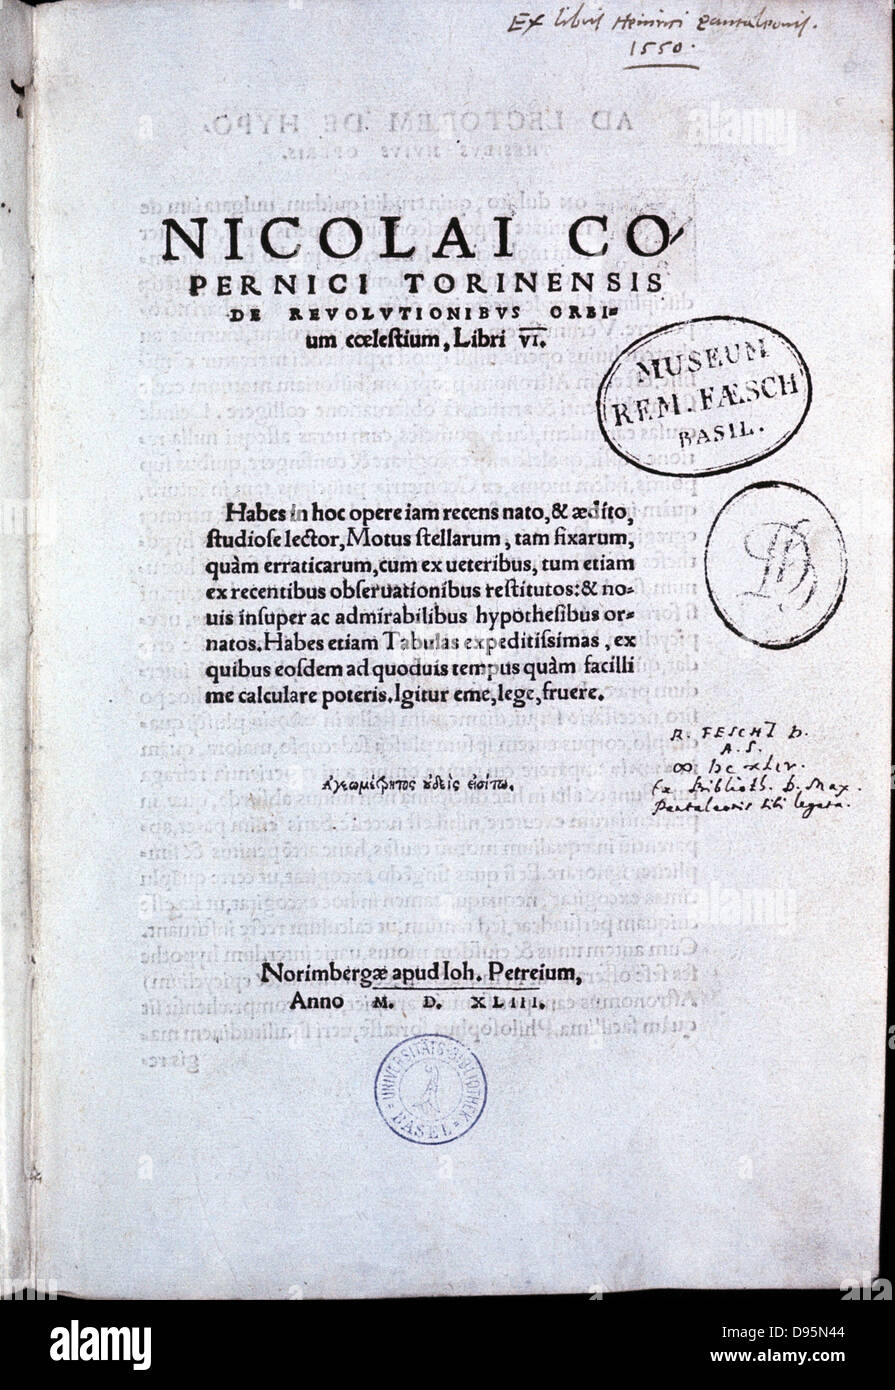 Nicolas Copernicus (1473-1543) Polish astronomer. Title page of his 'De revolutionibus orbium coelestium' Nuremberg 1543 which contained his heliocentric (sun-centred) theory of the universe. Stock Photo